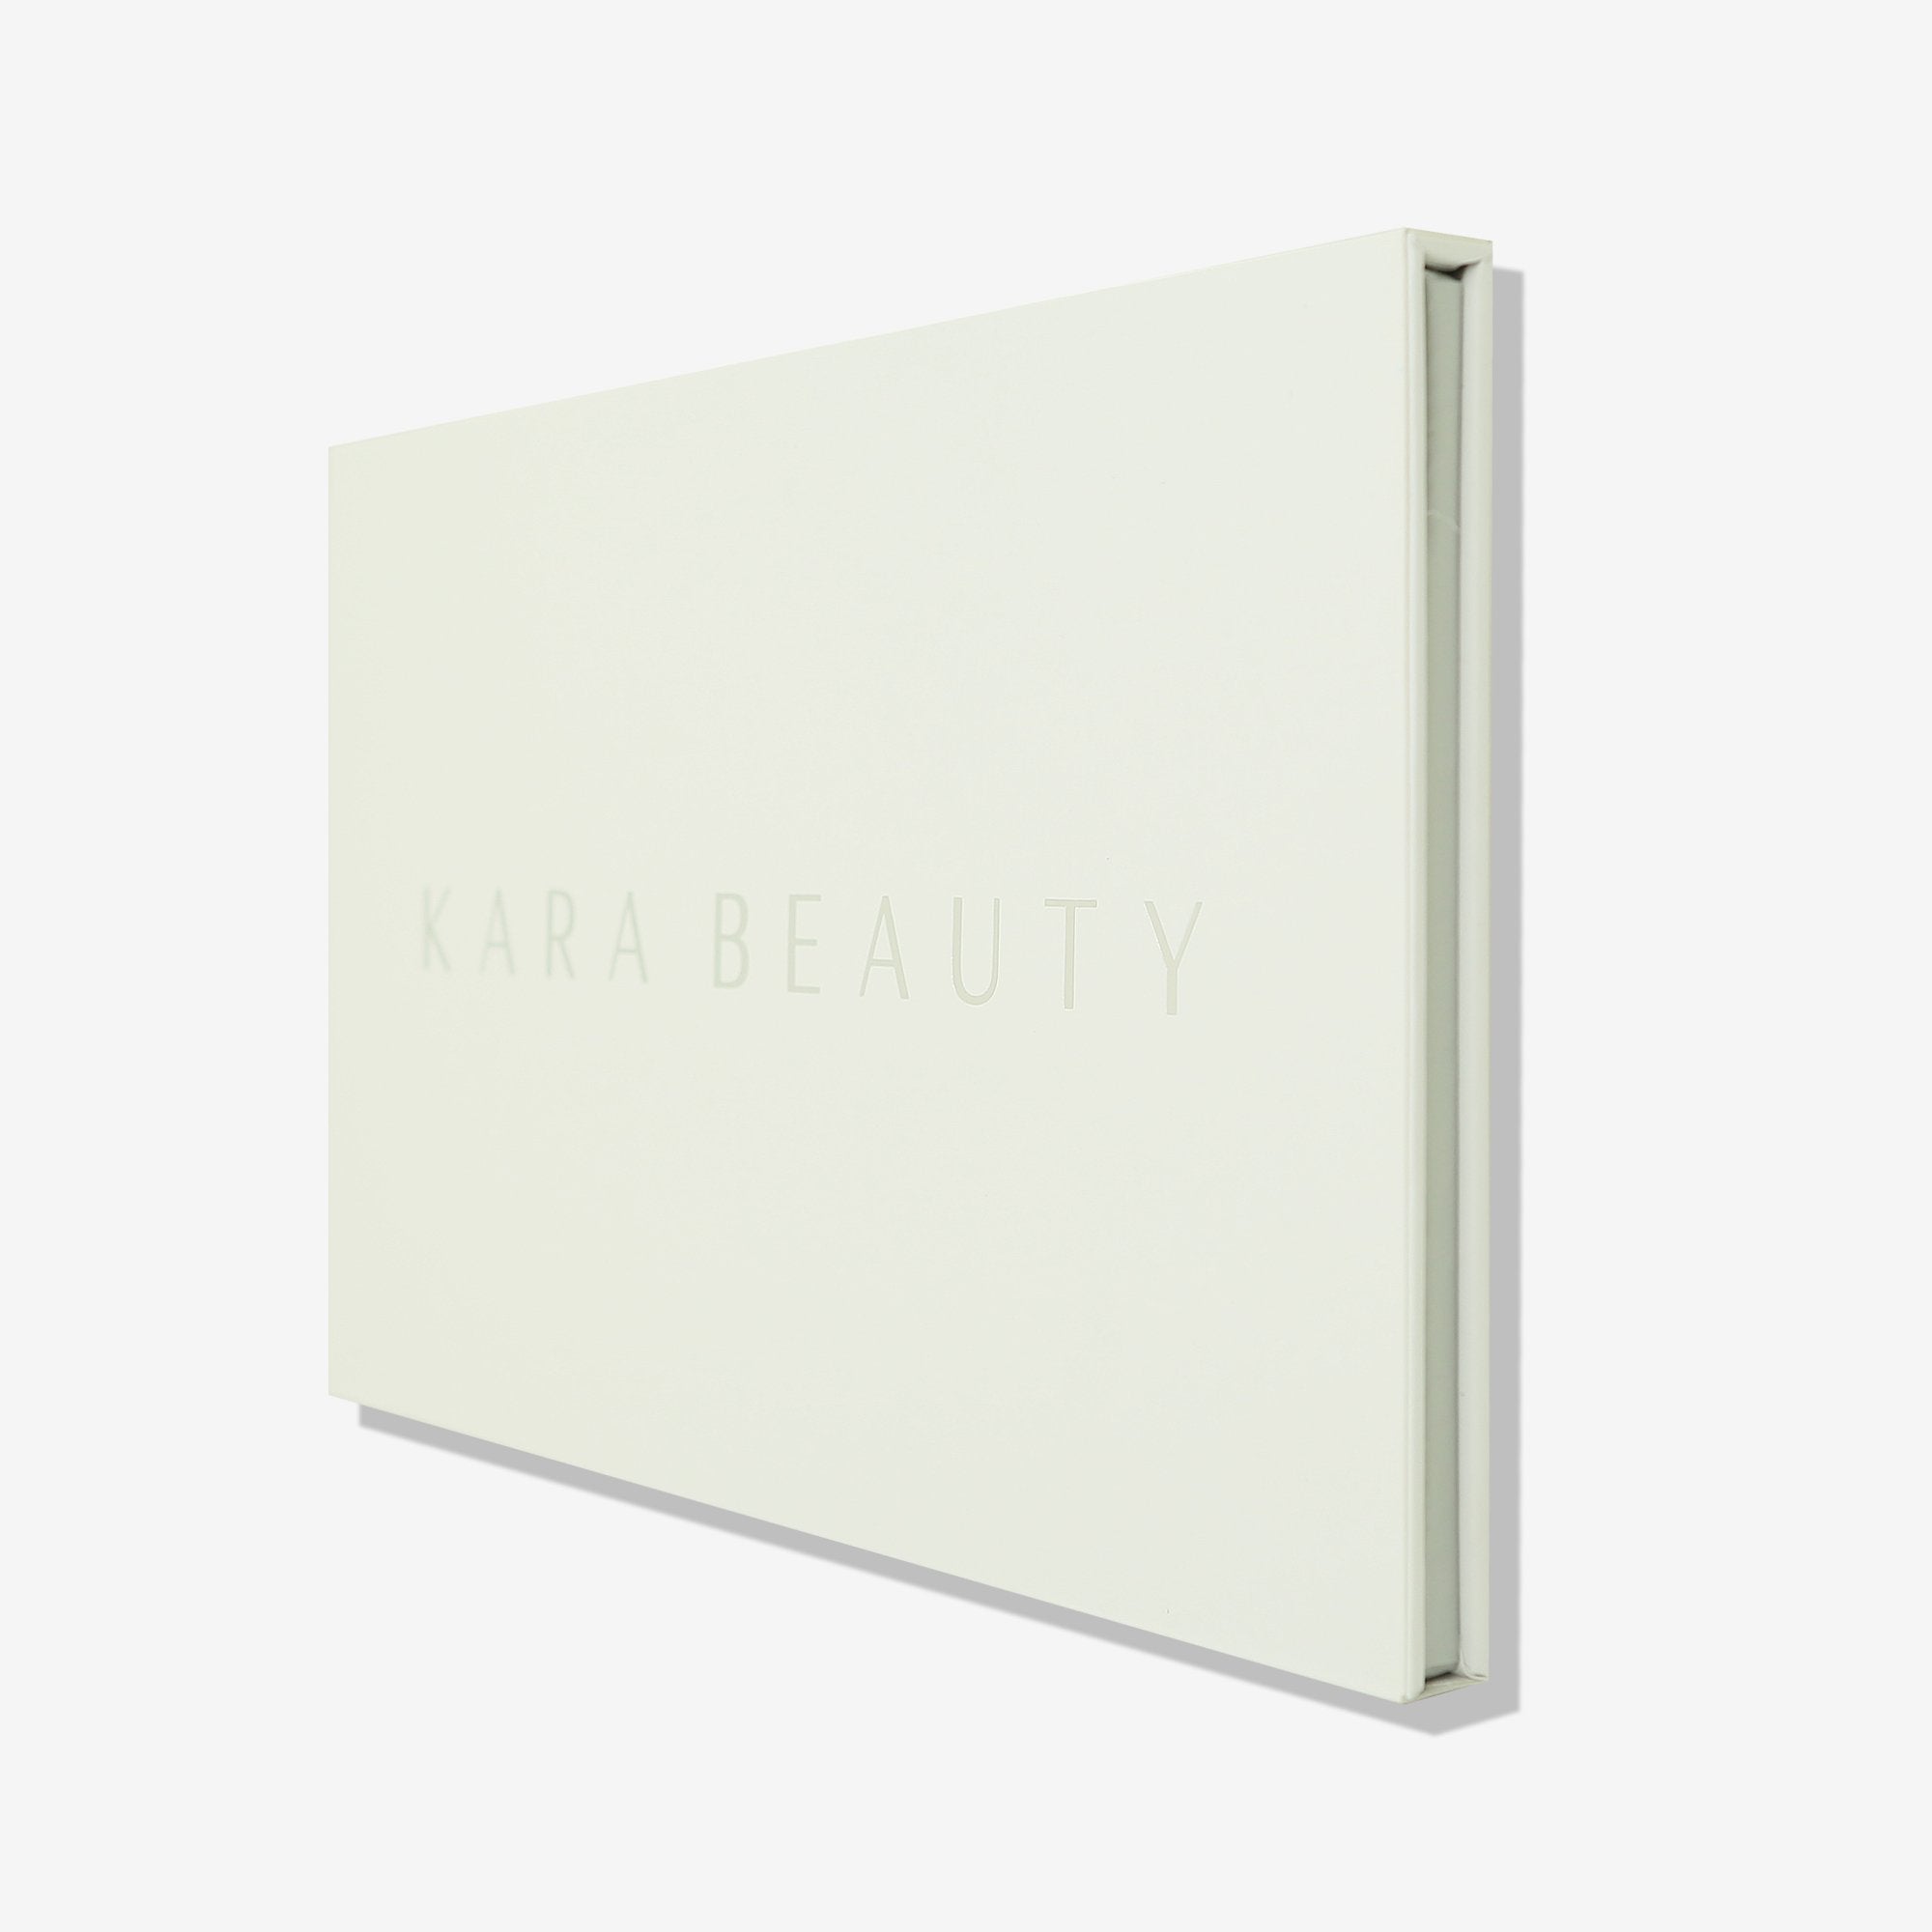 Kara Beauty - Smoky Blue Palette